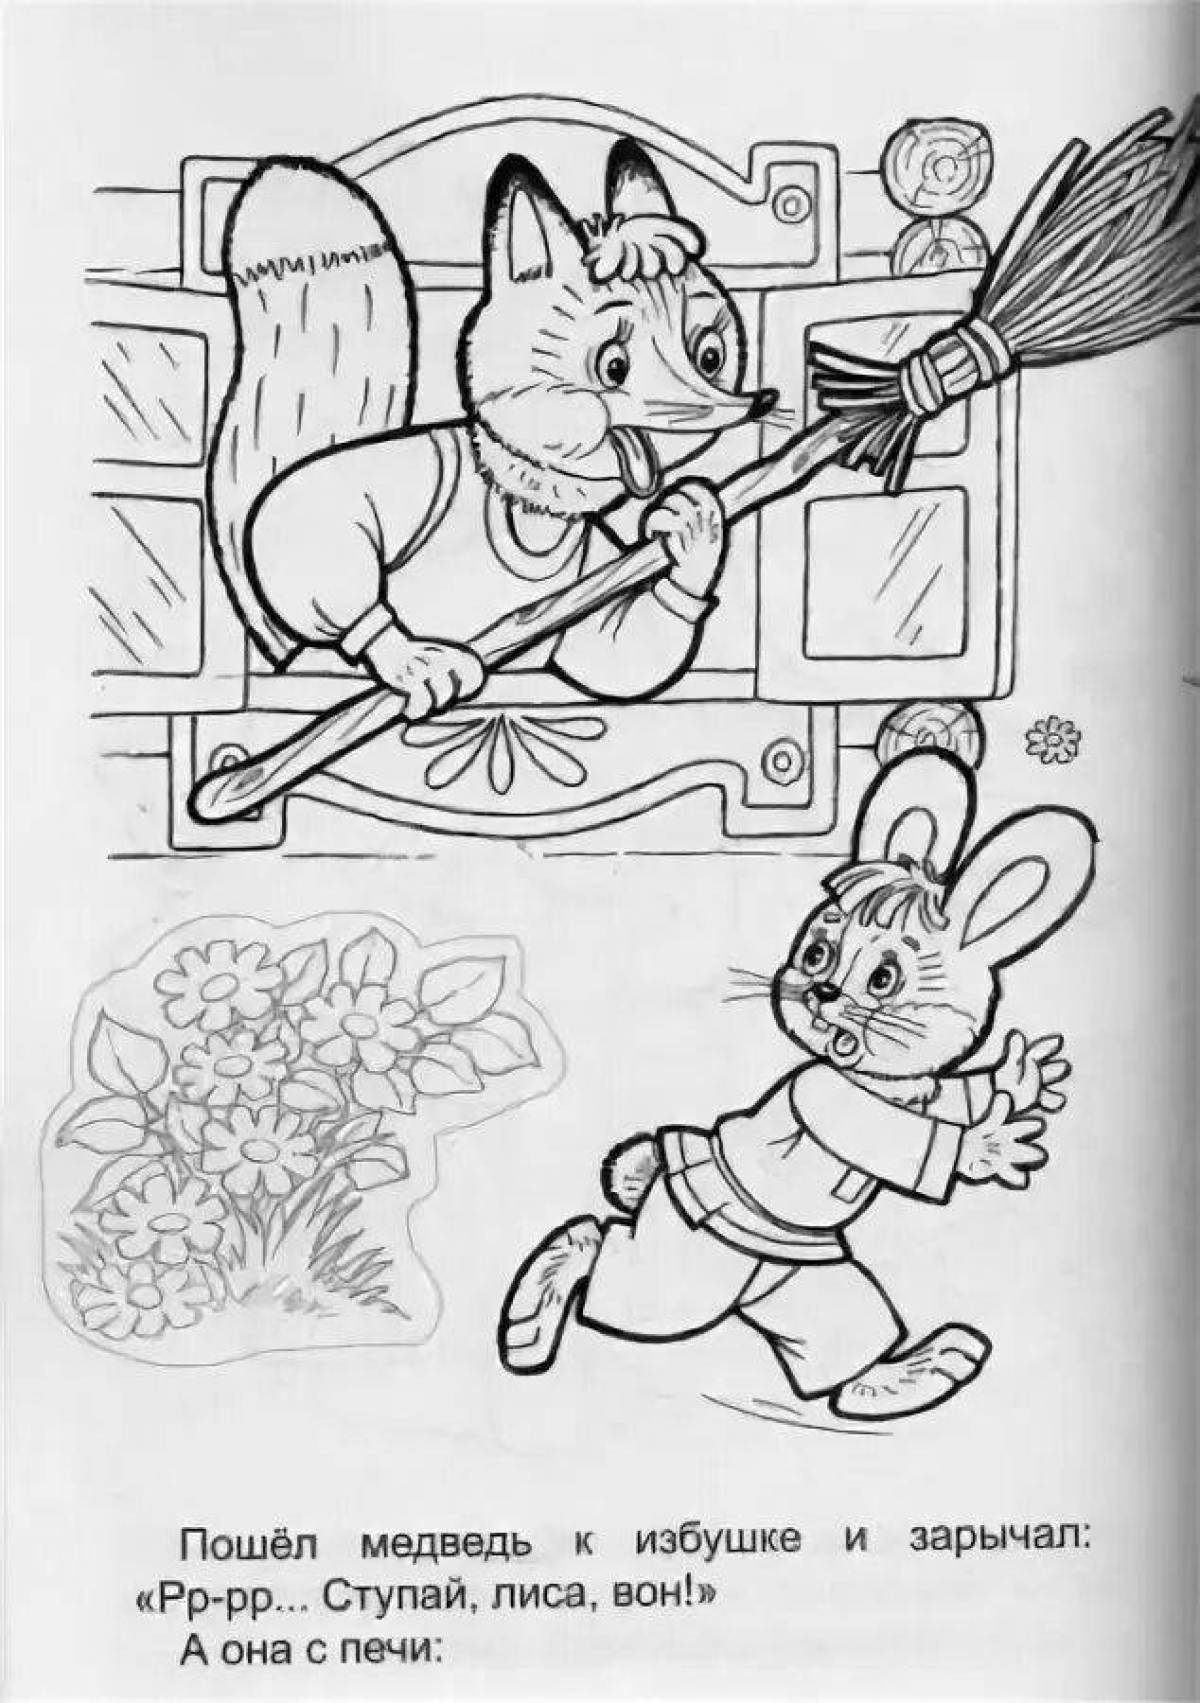 Amazing rabbit hut coloring page